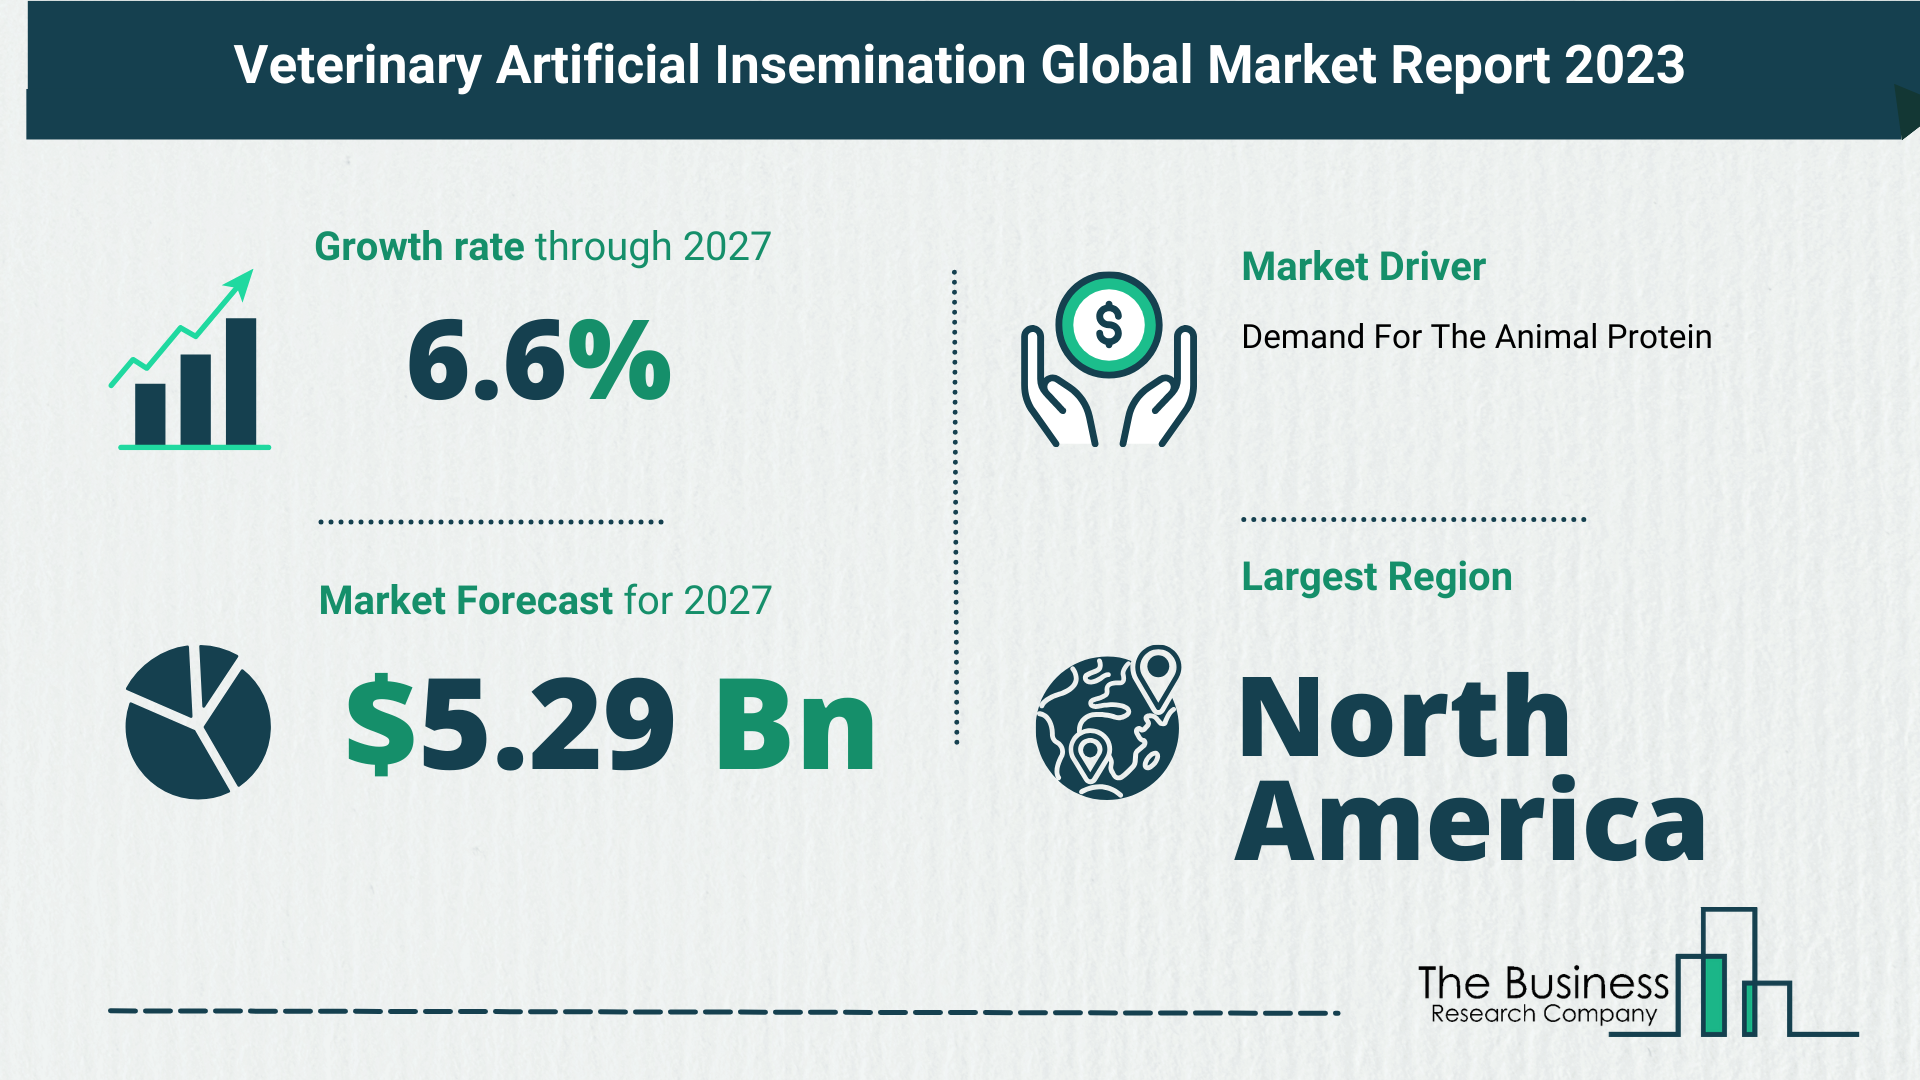 Global Veterinary Artificial Insemination Market